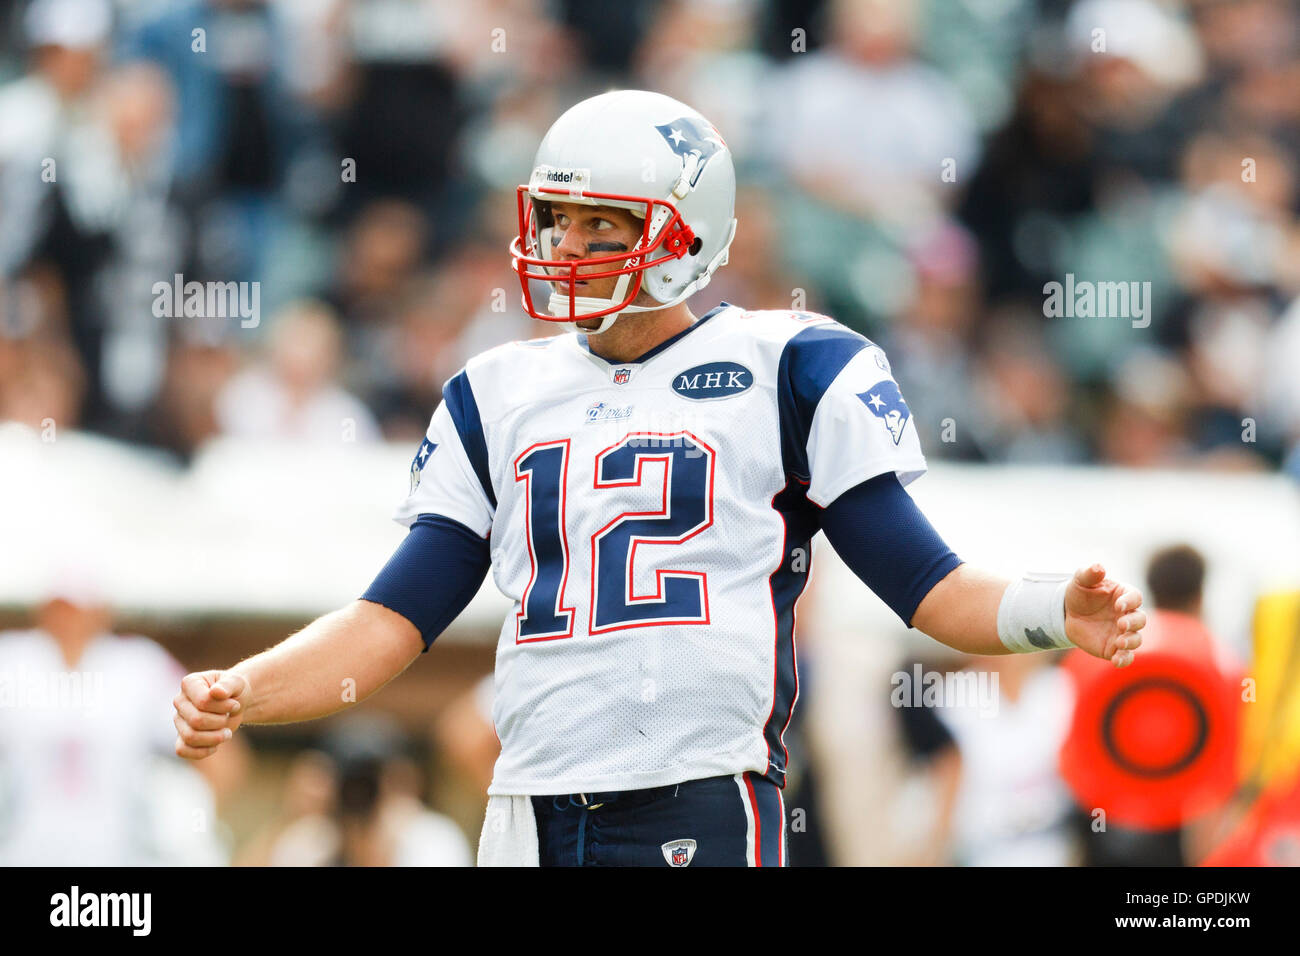 Okt 2, 2011; Oakland, Ca, USA; New England Patriots Quarterback Tom Brady (12) nach einem Spiel gegen die Oakland Raiders während des vierten Quartals bei o.co Kolosseum. new england Oakland 31-19 besiegt. Stockfoto